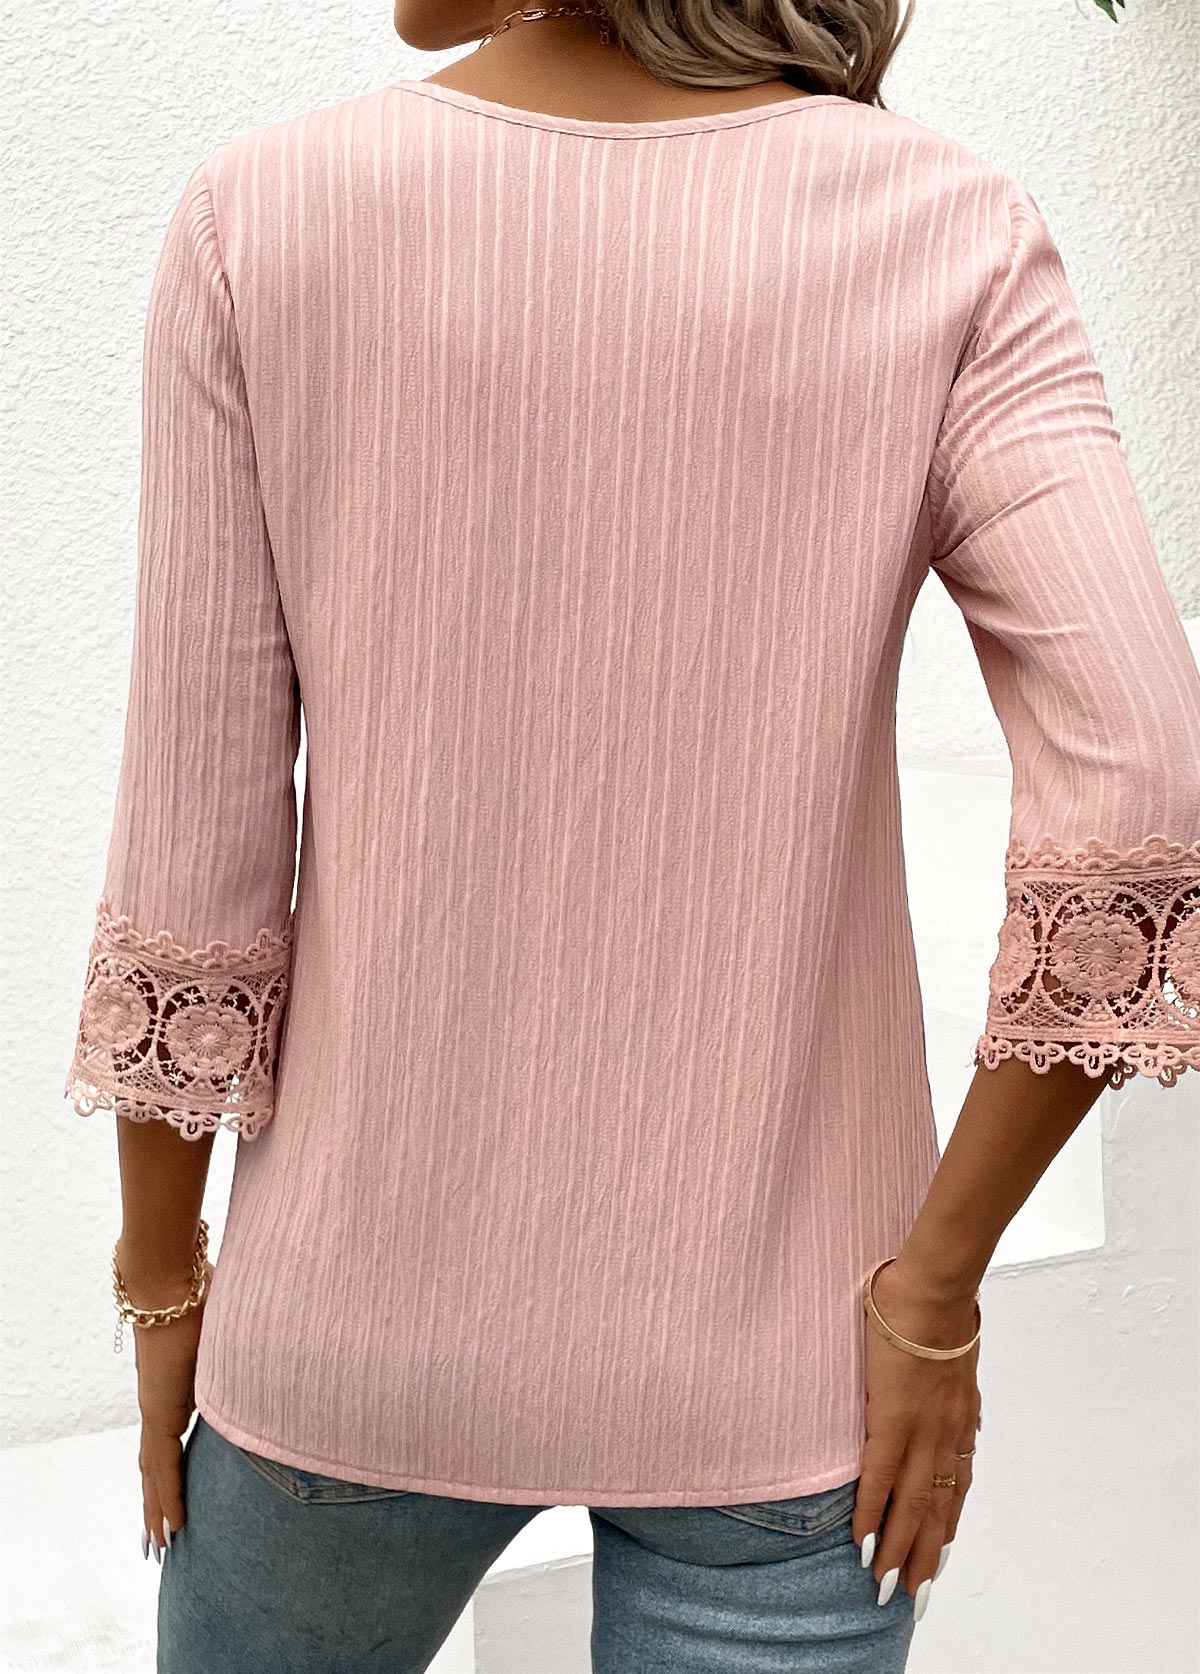 Lace Light Pink Three Quarter Length Sleeve Blouse